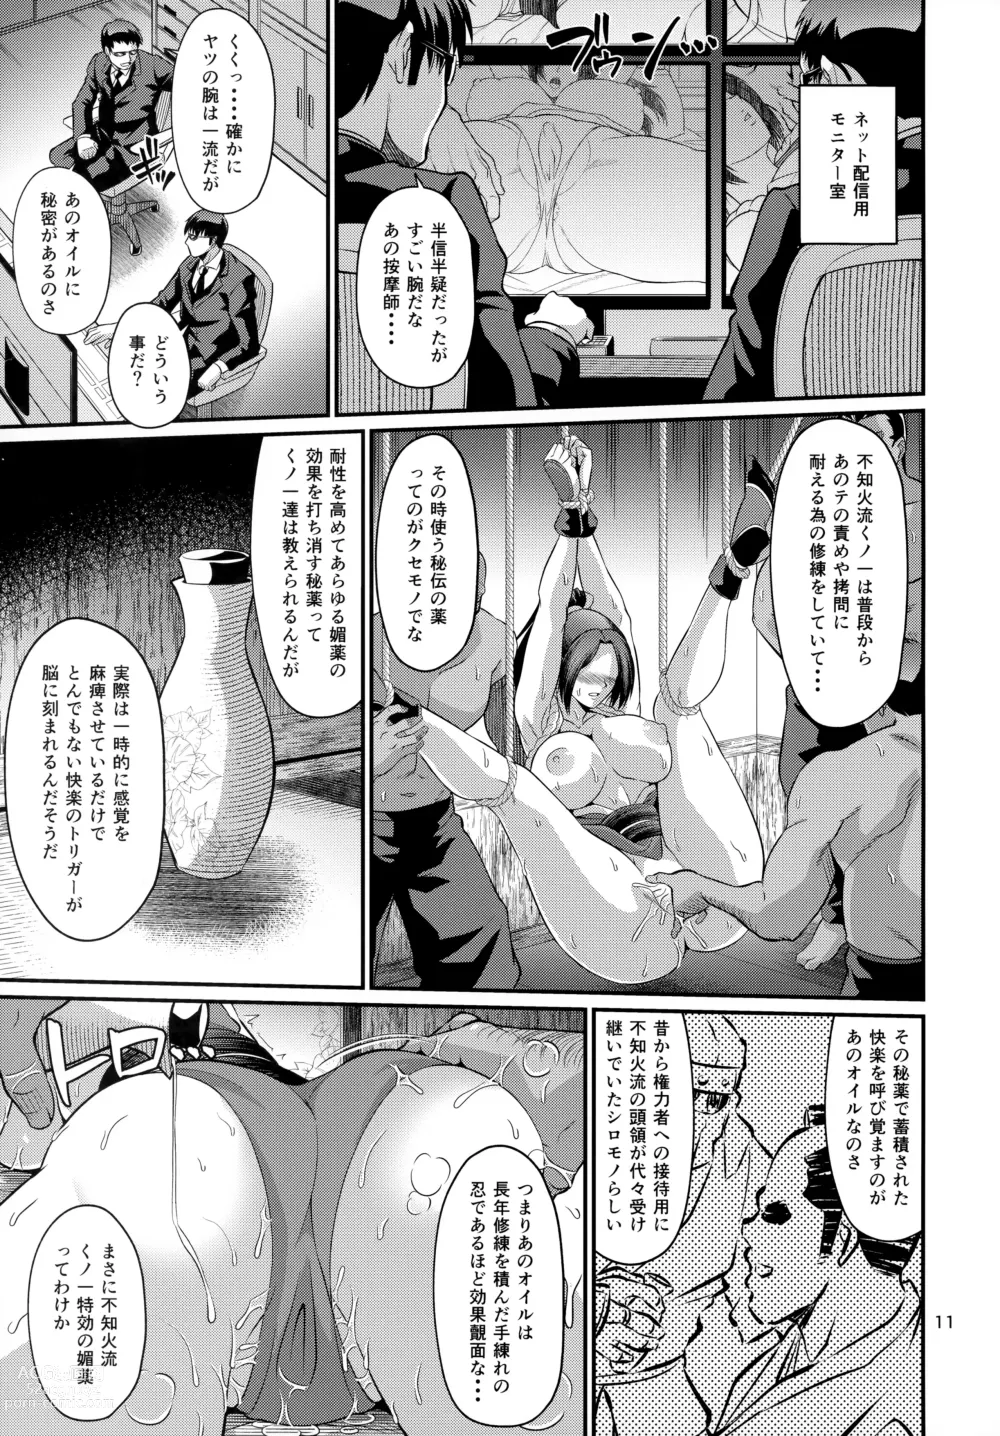 Page 11 of doujinshi Shiranui-ryuu Kunoichi Saiin Oil Massage